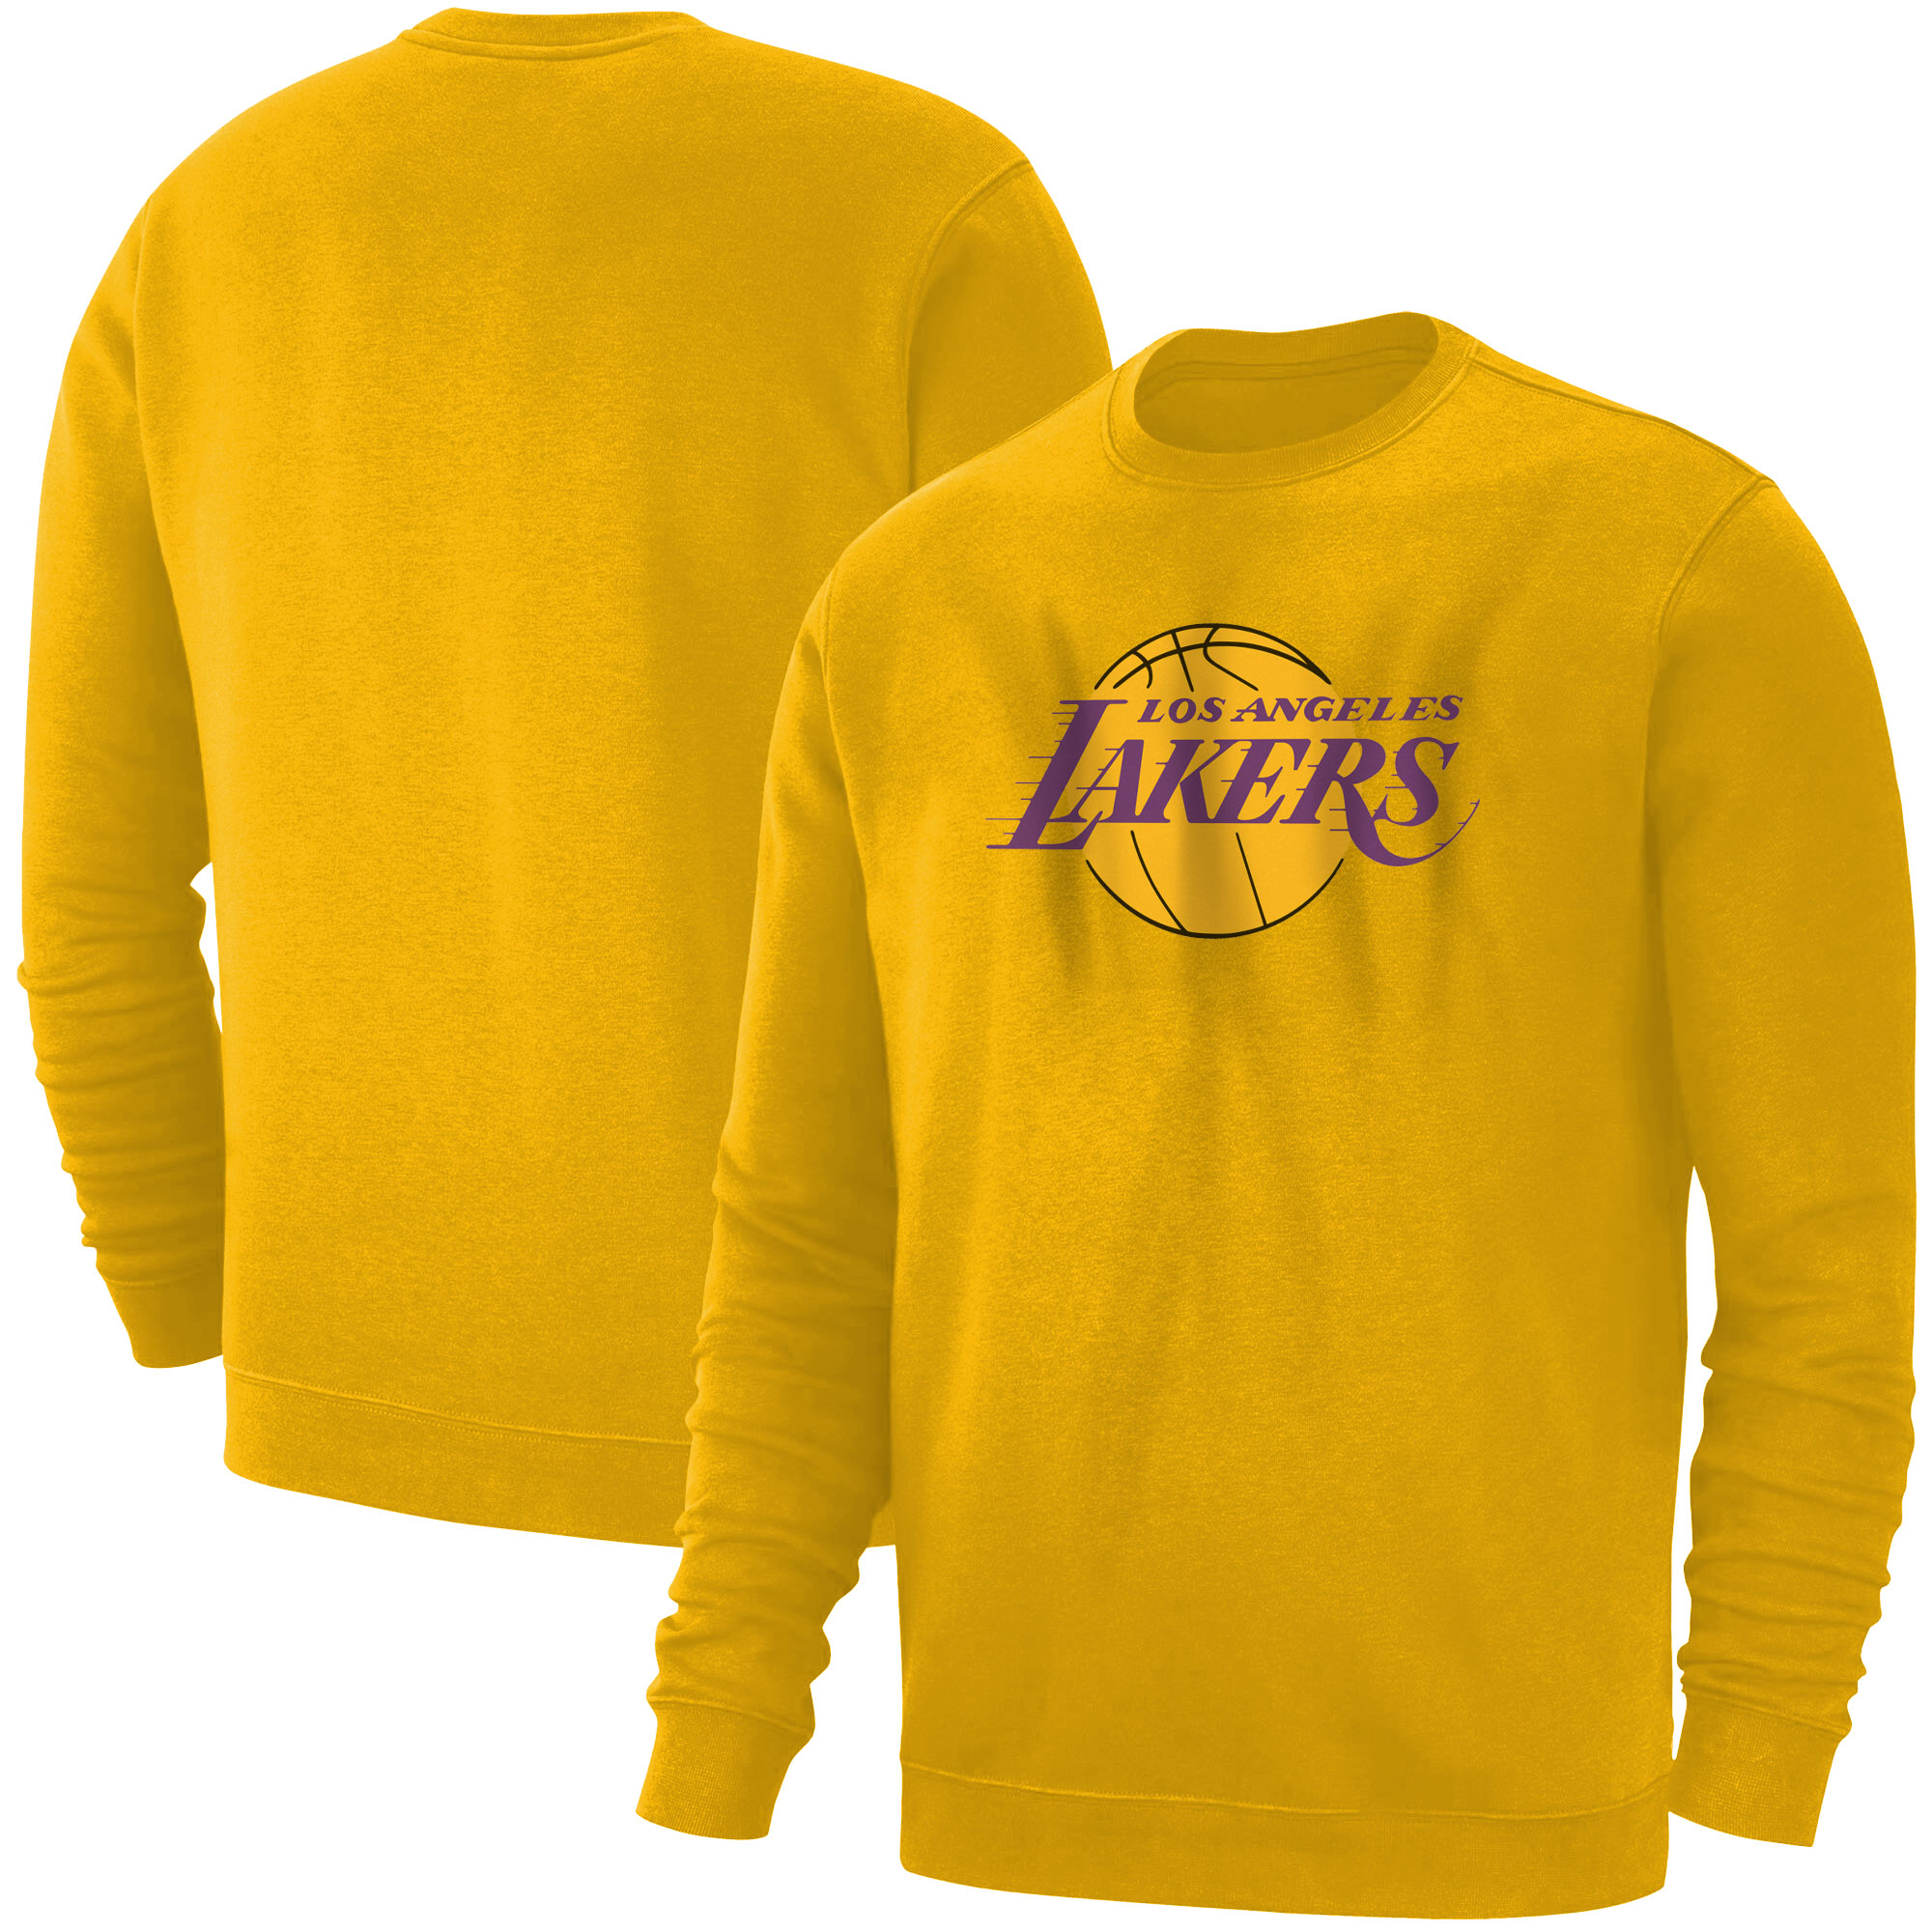 L.A. Lakers Basic (BSC-YLW-135-NBA-LAL-LOGO)